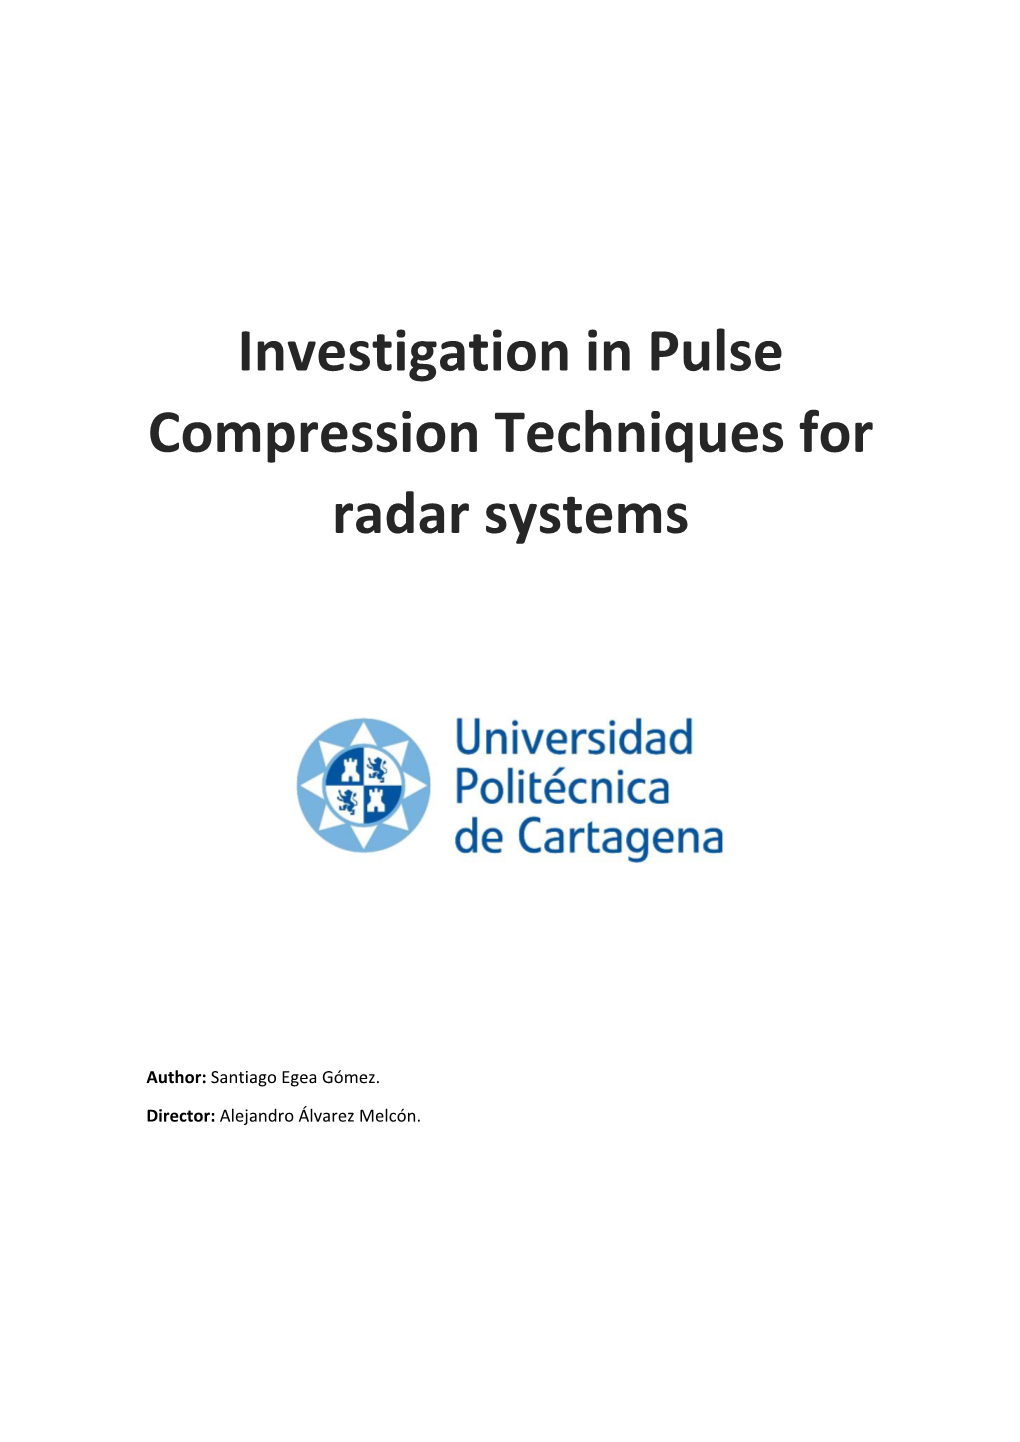 Investigation in Pulse Compression Techniques for Radar Systems